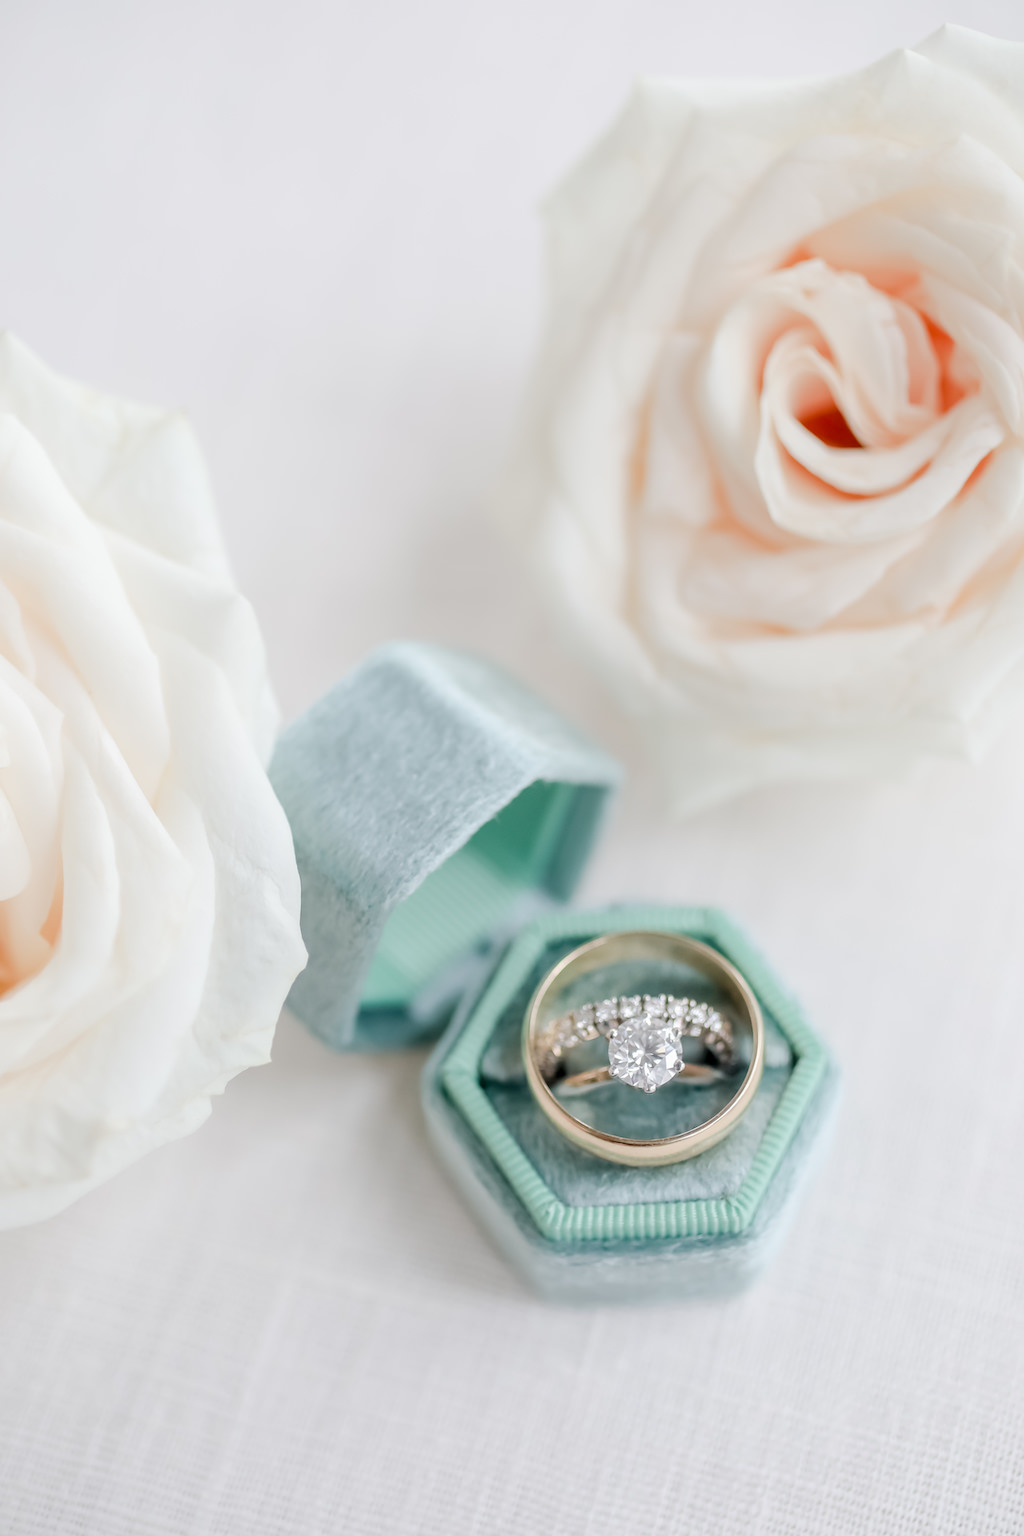 Round Diamond Engagement Ring, Groom Gold Wedding Ring, Bride Diamond Wedding Ring in Green Velvet Ring Box | Tampa Bay Wedding Photographer Lifelong Photography Studio